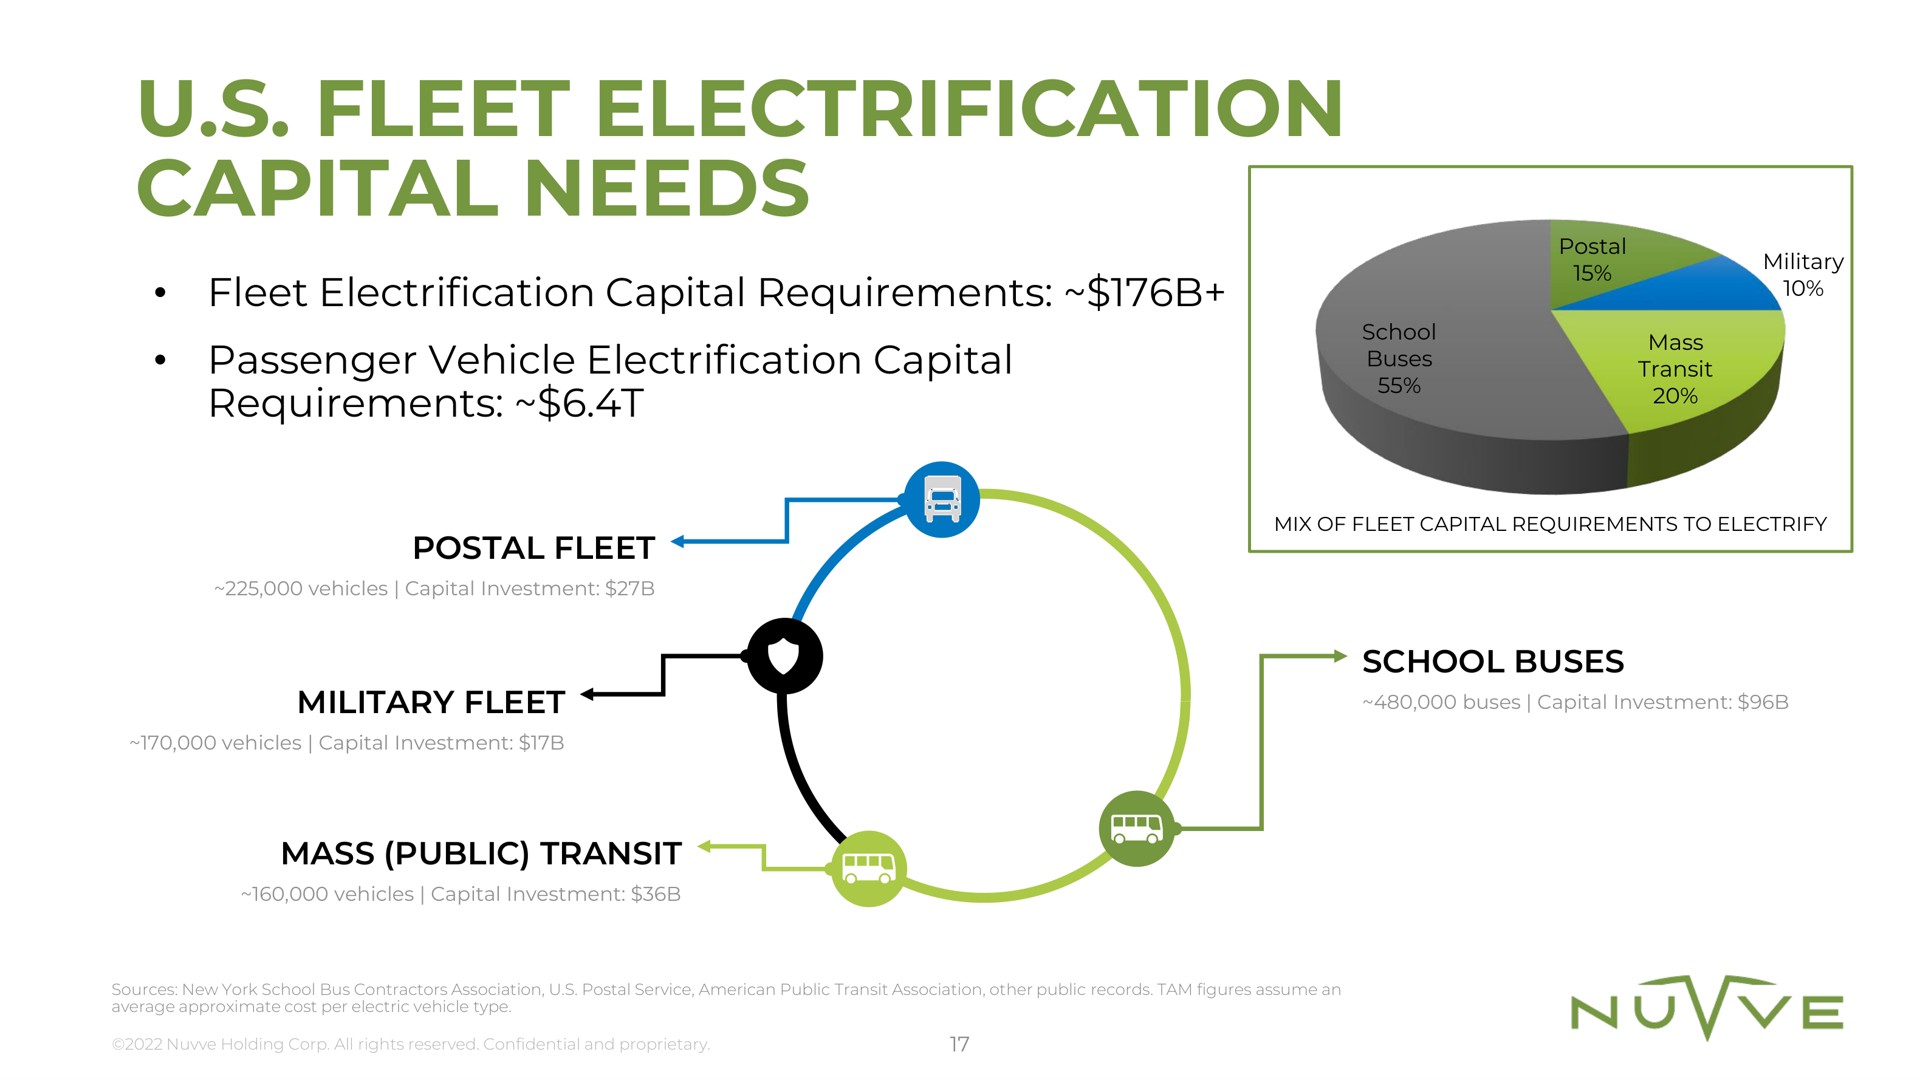 fleet electrification capital needs requirements | Nuvve